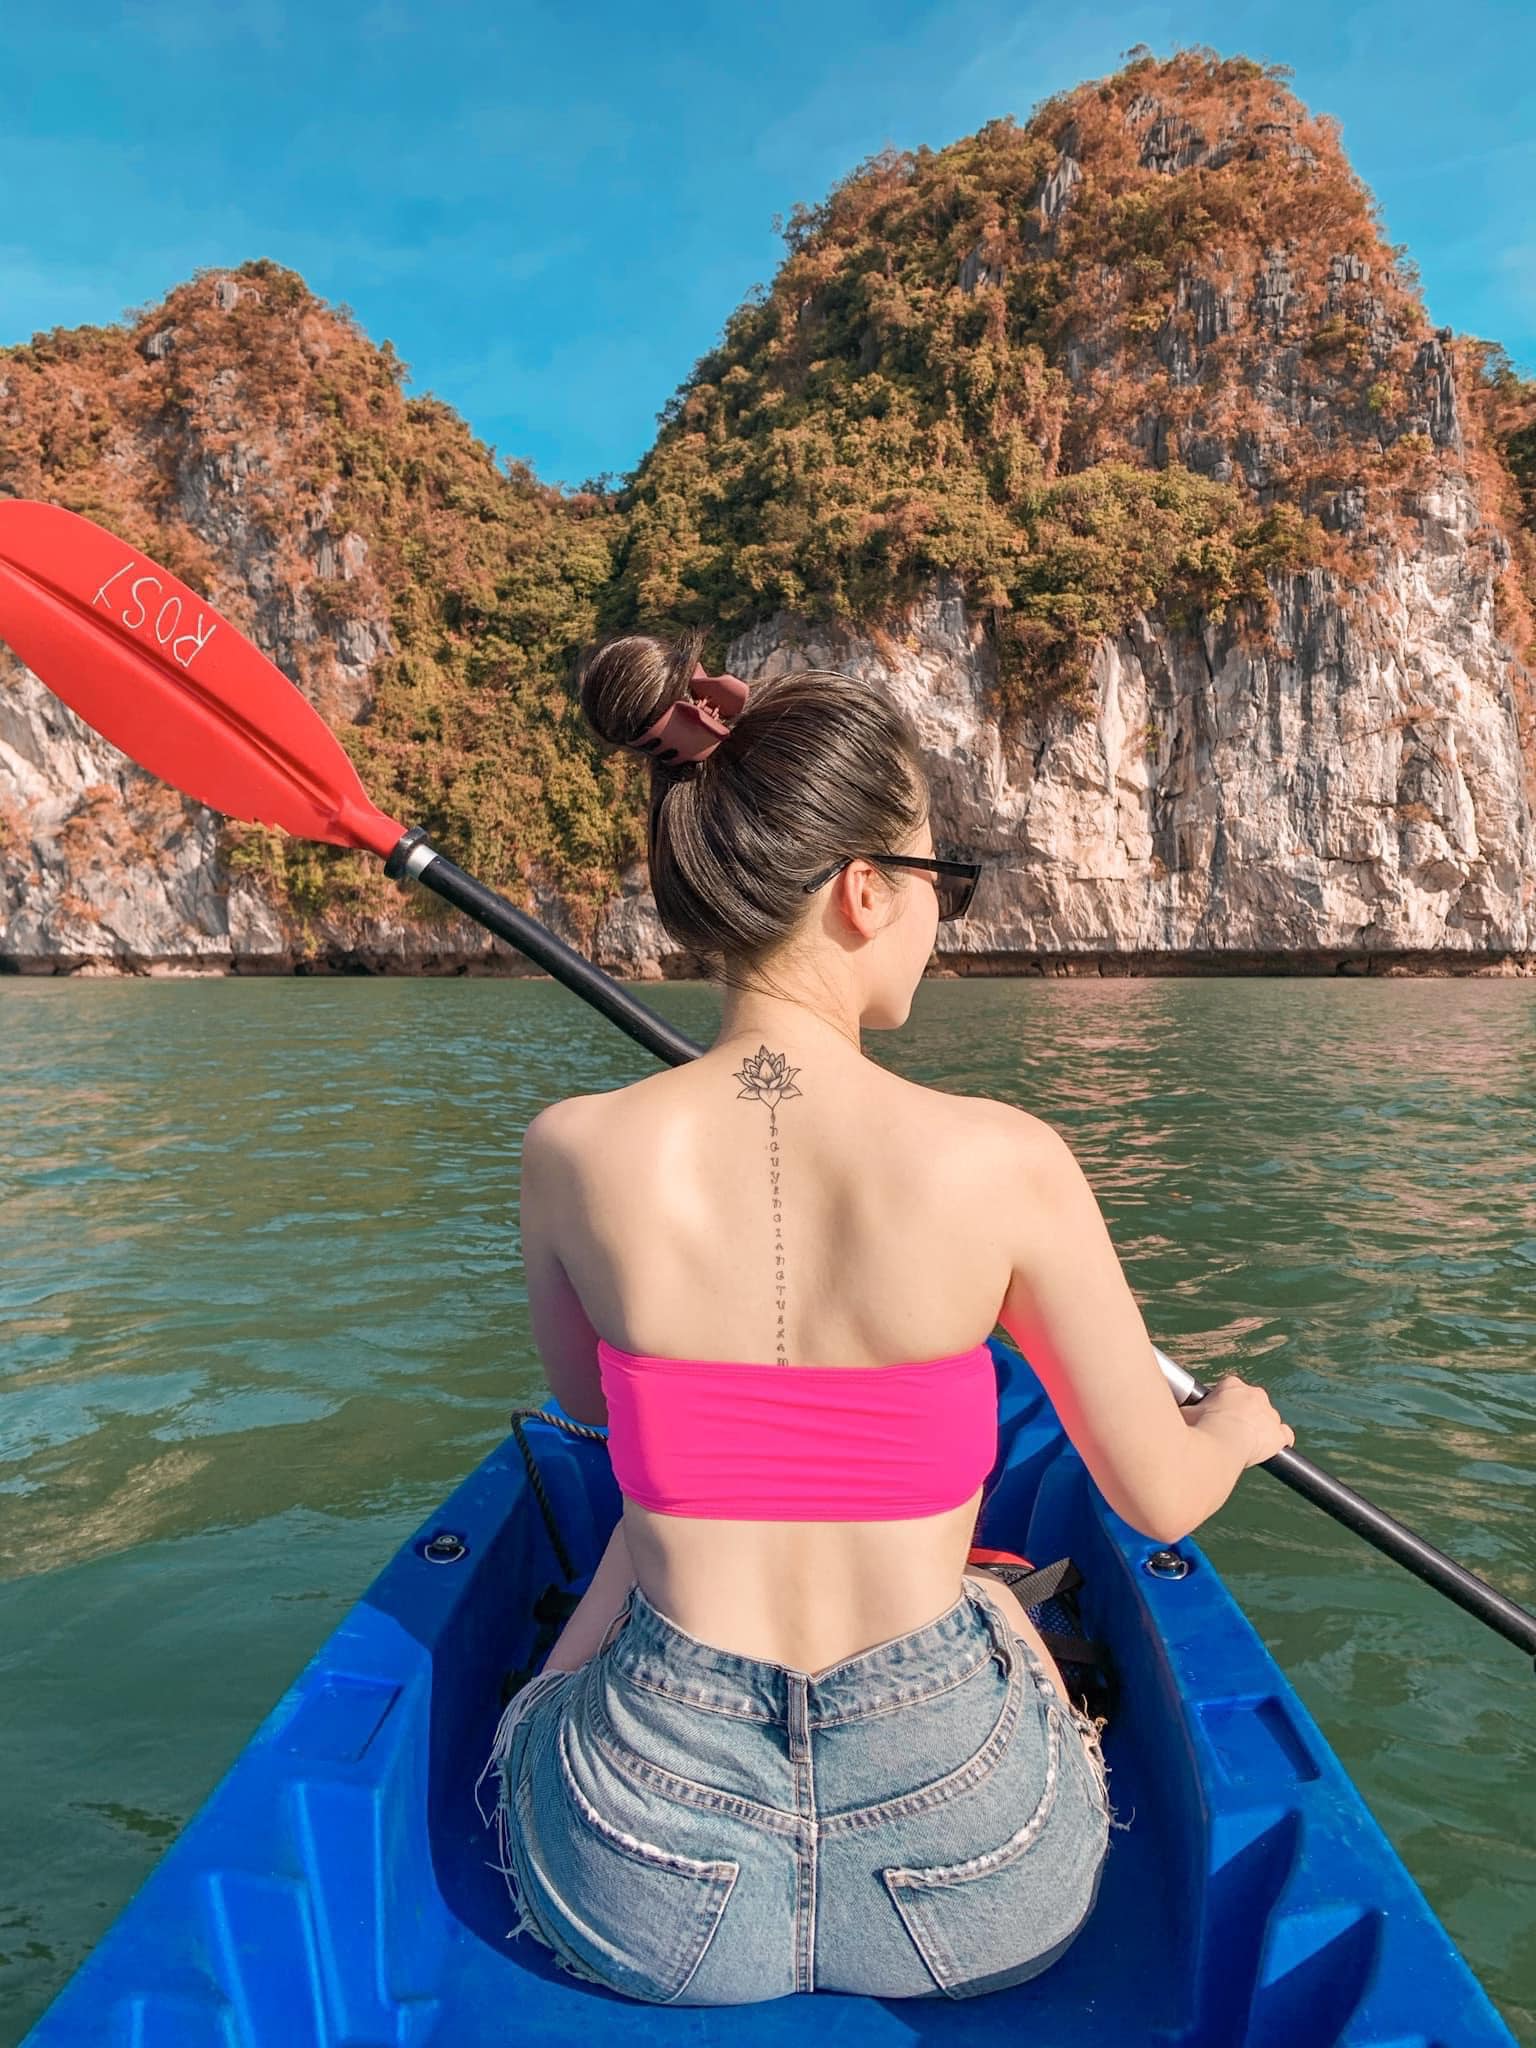 Chèo Kayak Vịnh Lan Hạ